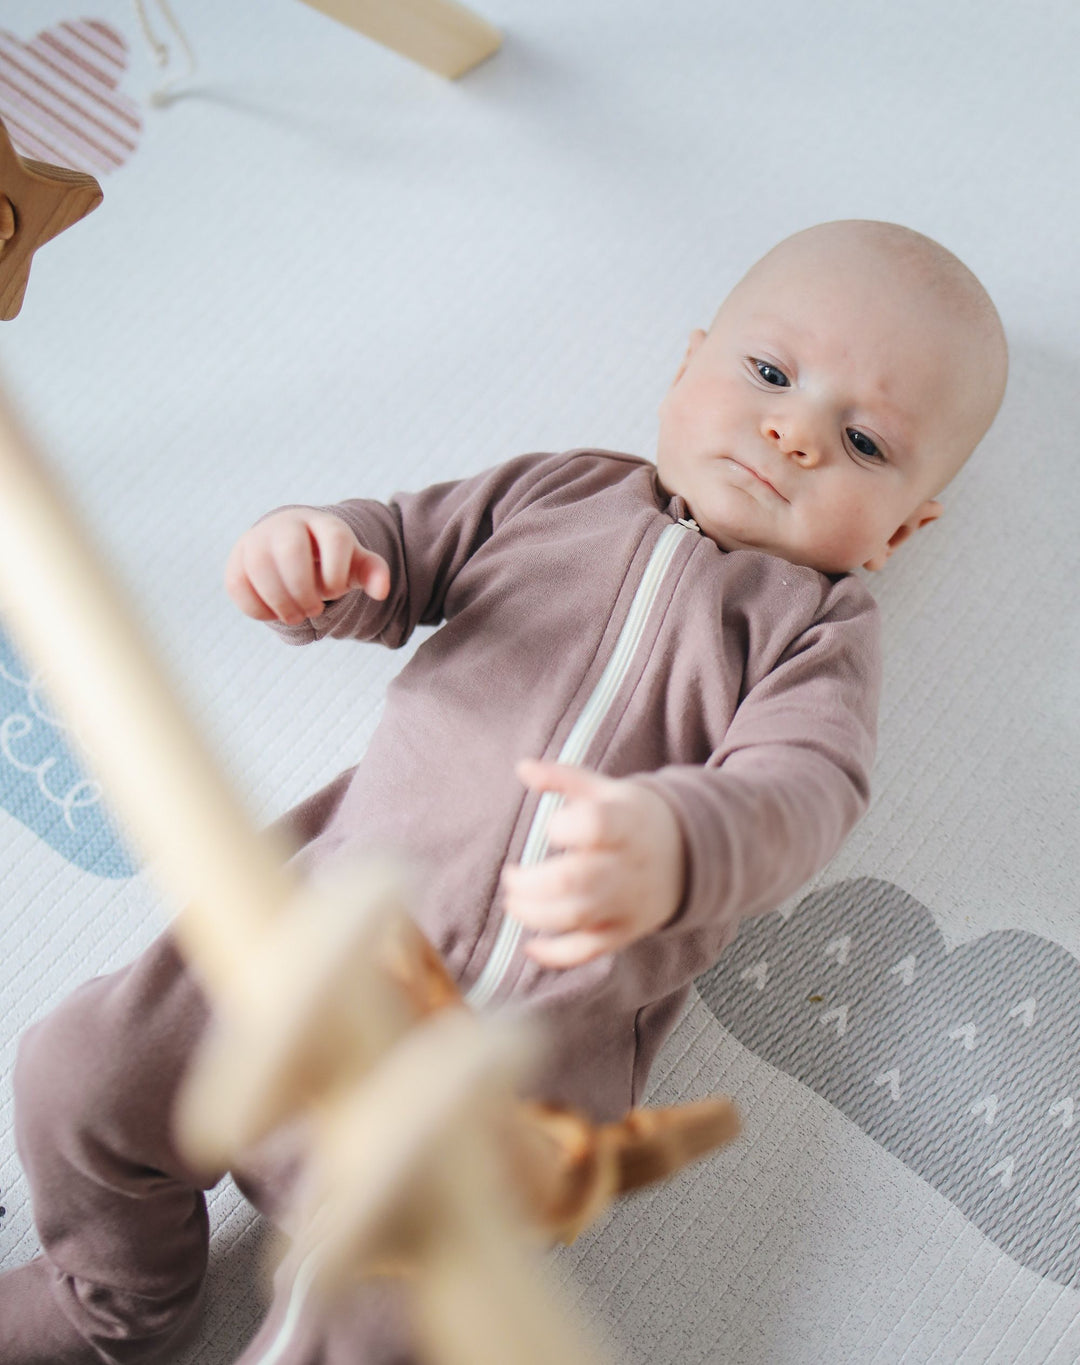 Toddler Comforter Vs Crib Comforter - Comparison And Tips